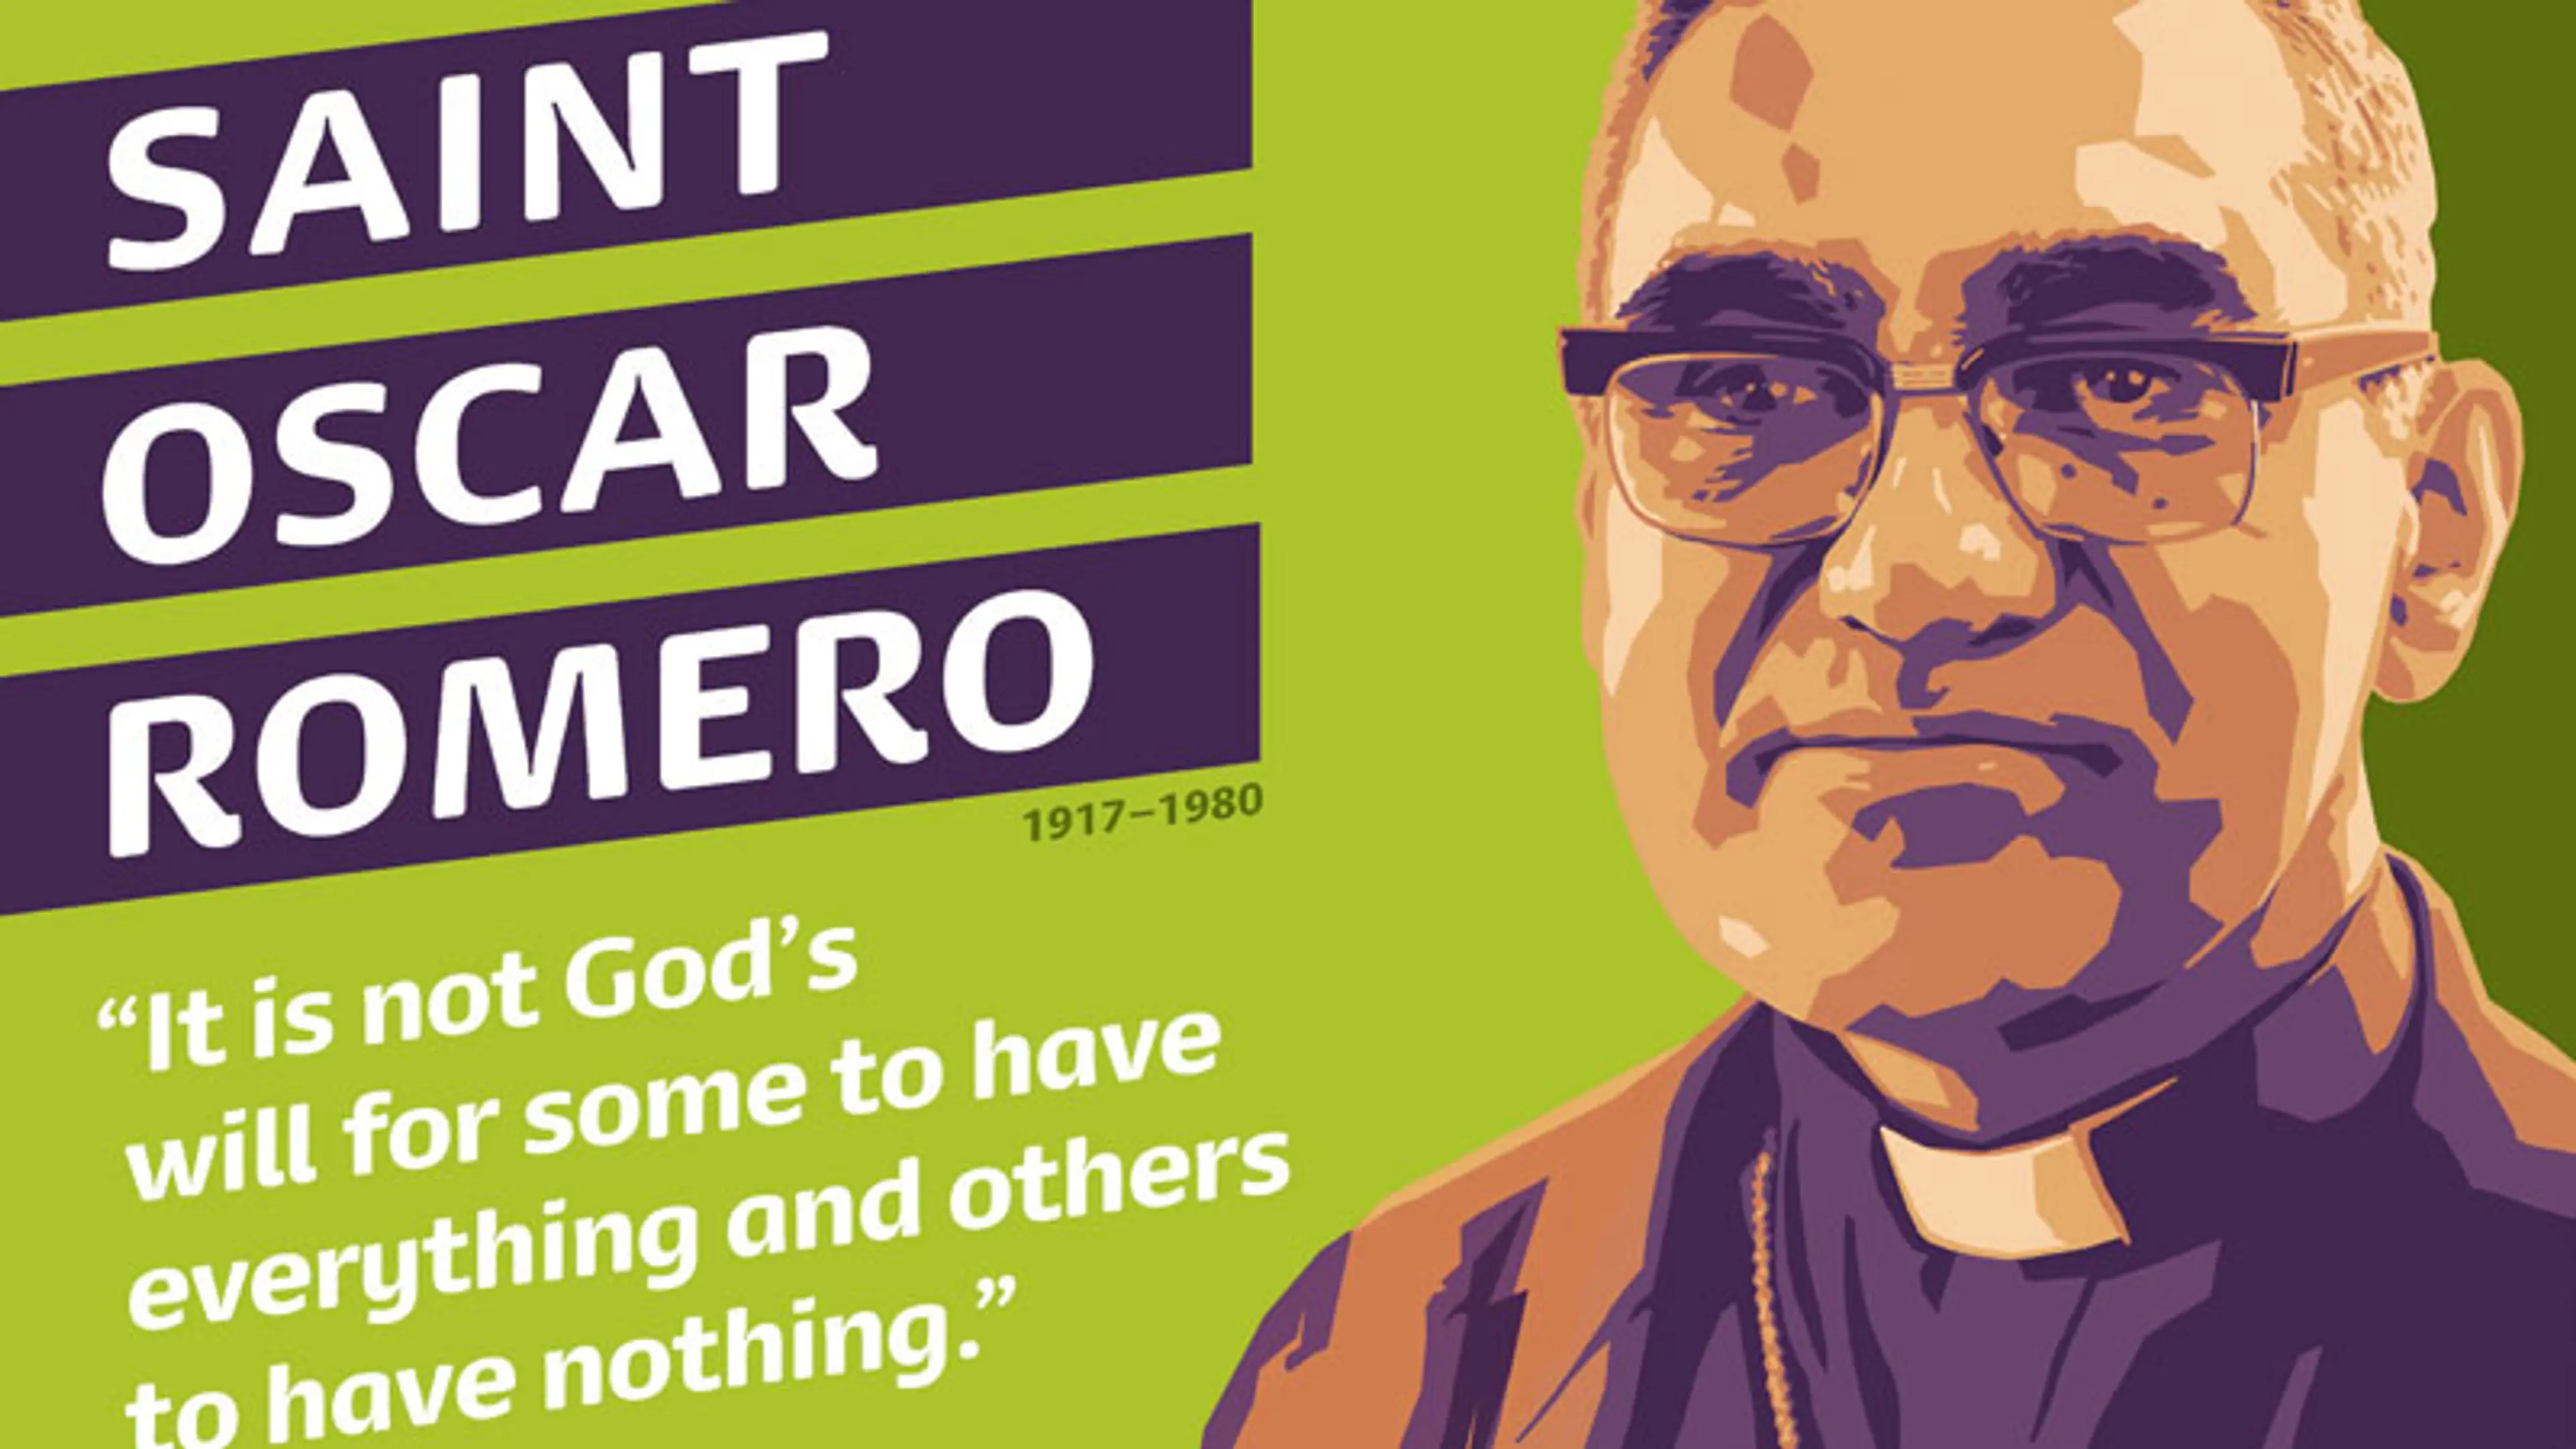 Romero poster image